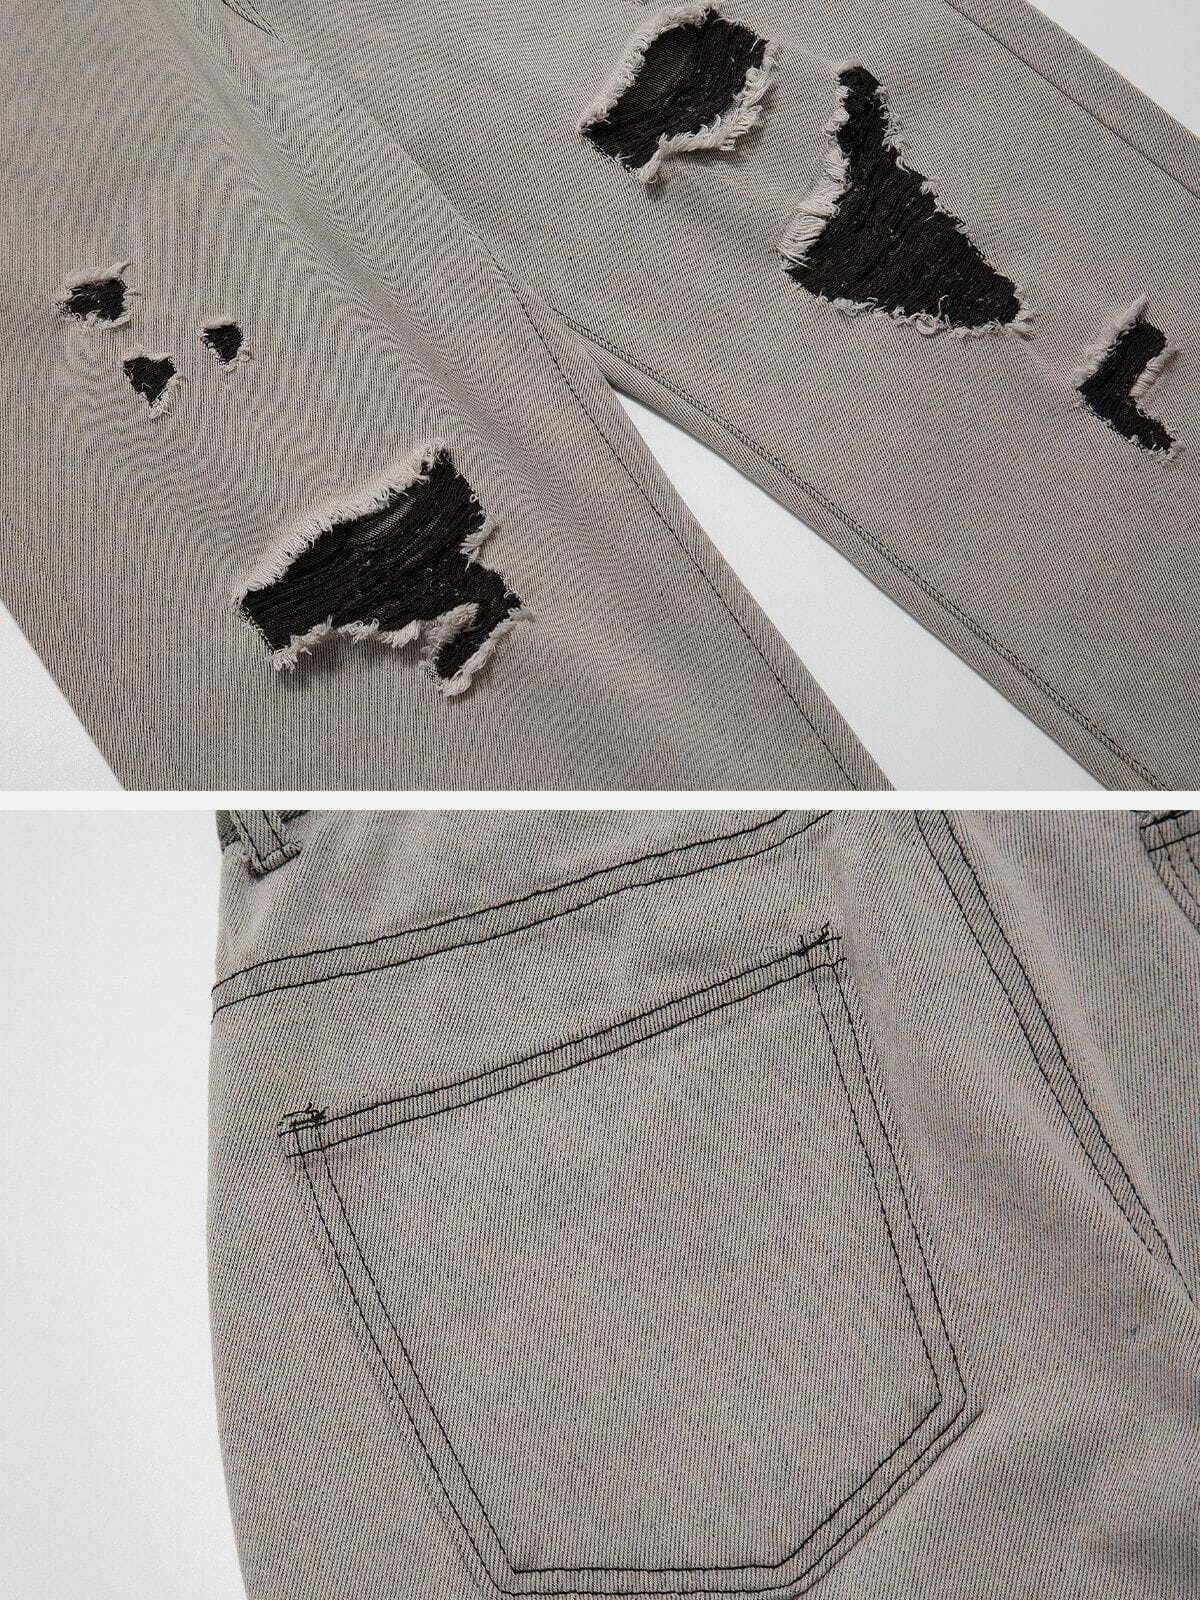 washed hole design jeans edgy & distinctive denim 4605